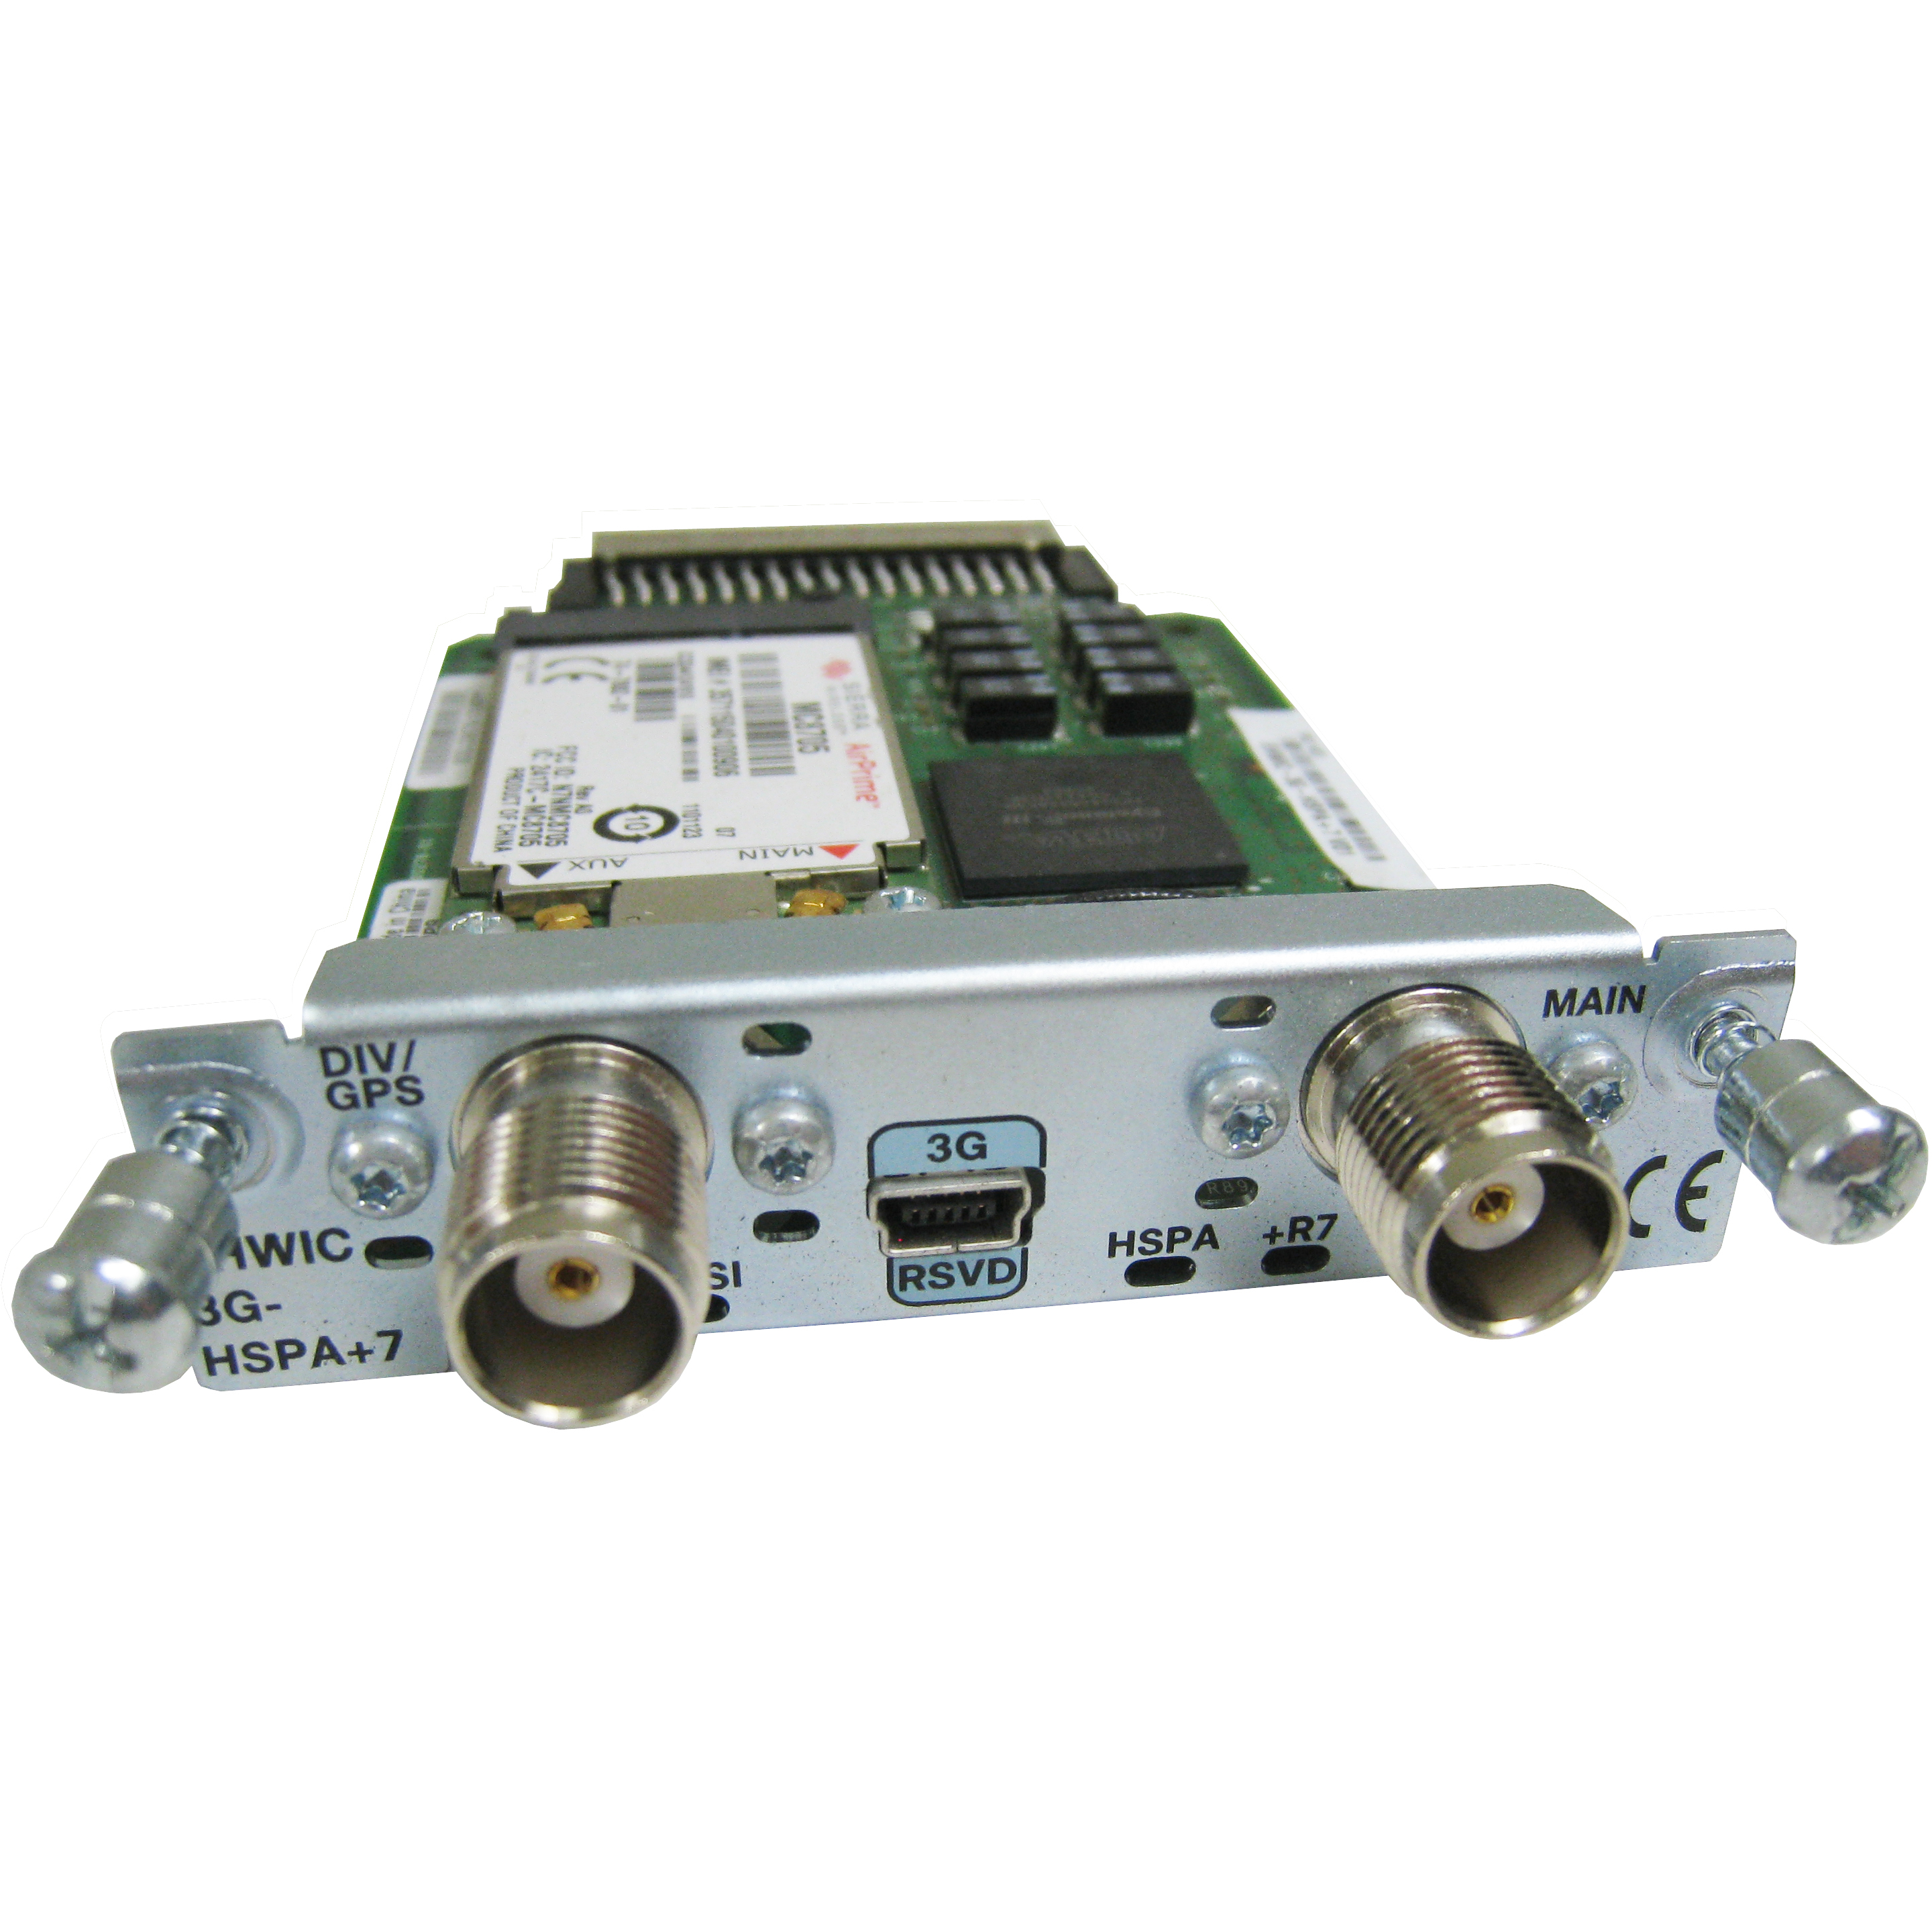 Cisco EHWIC-3G-HSPA+7-A